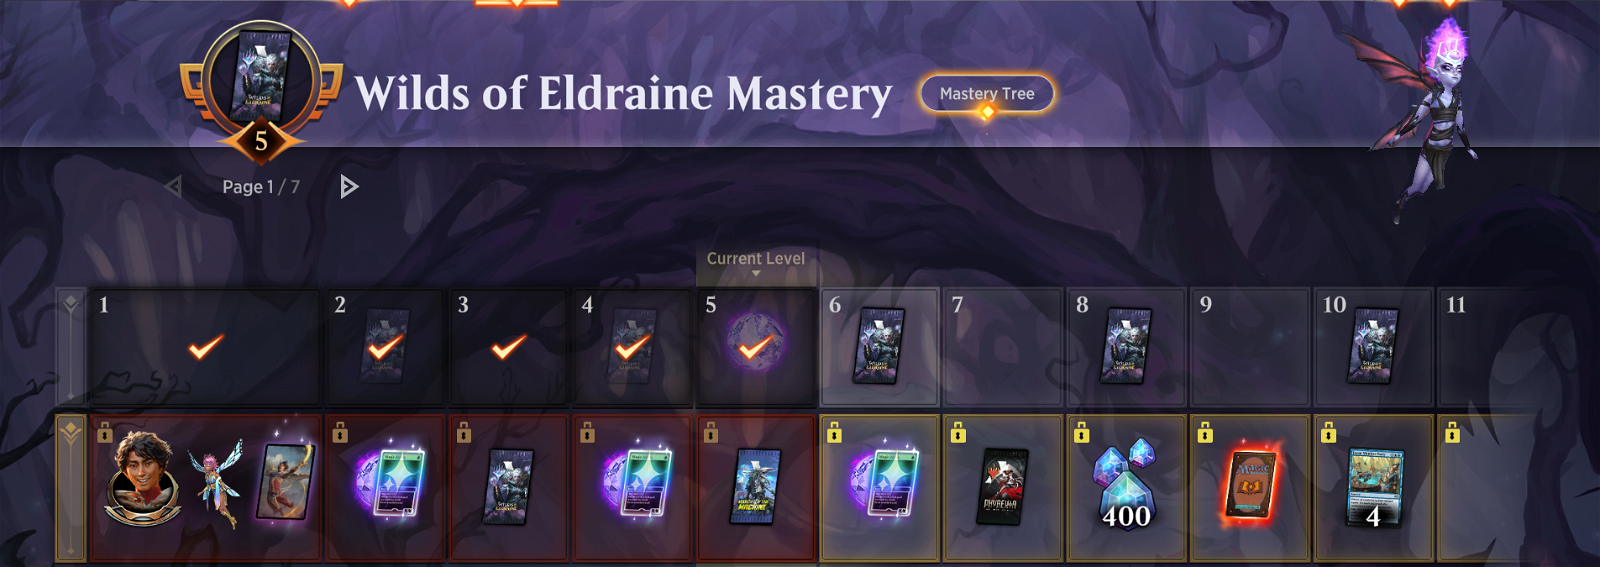 Wilds of Eldraine Mastery Pass levels